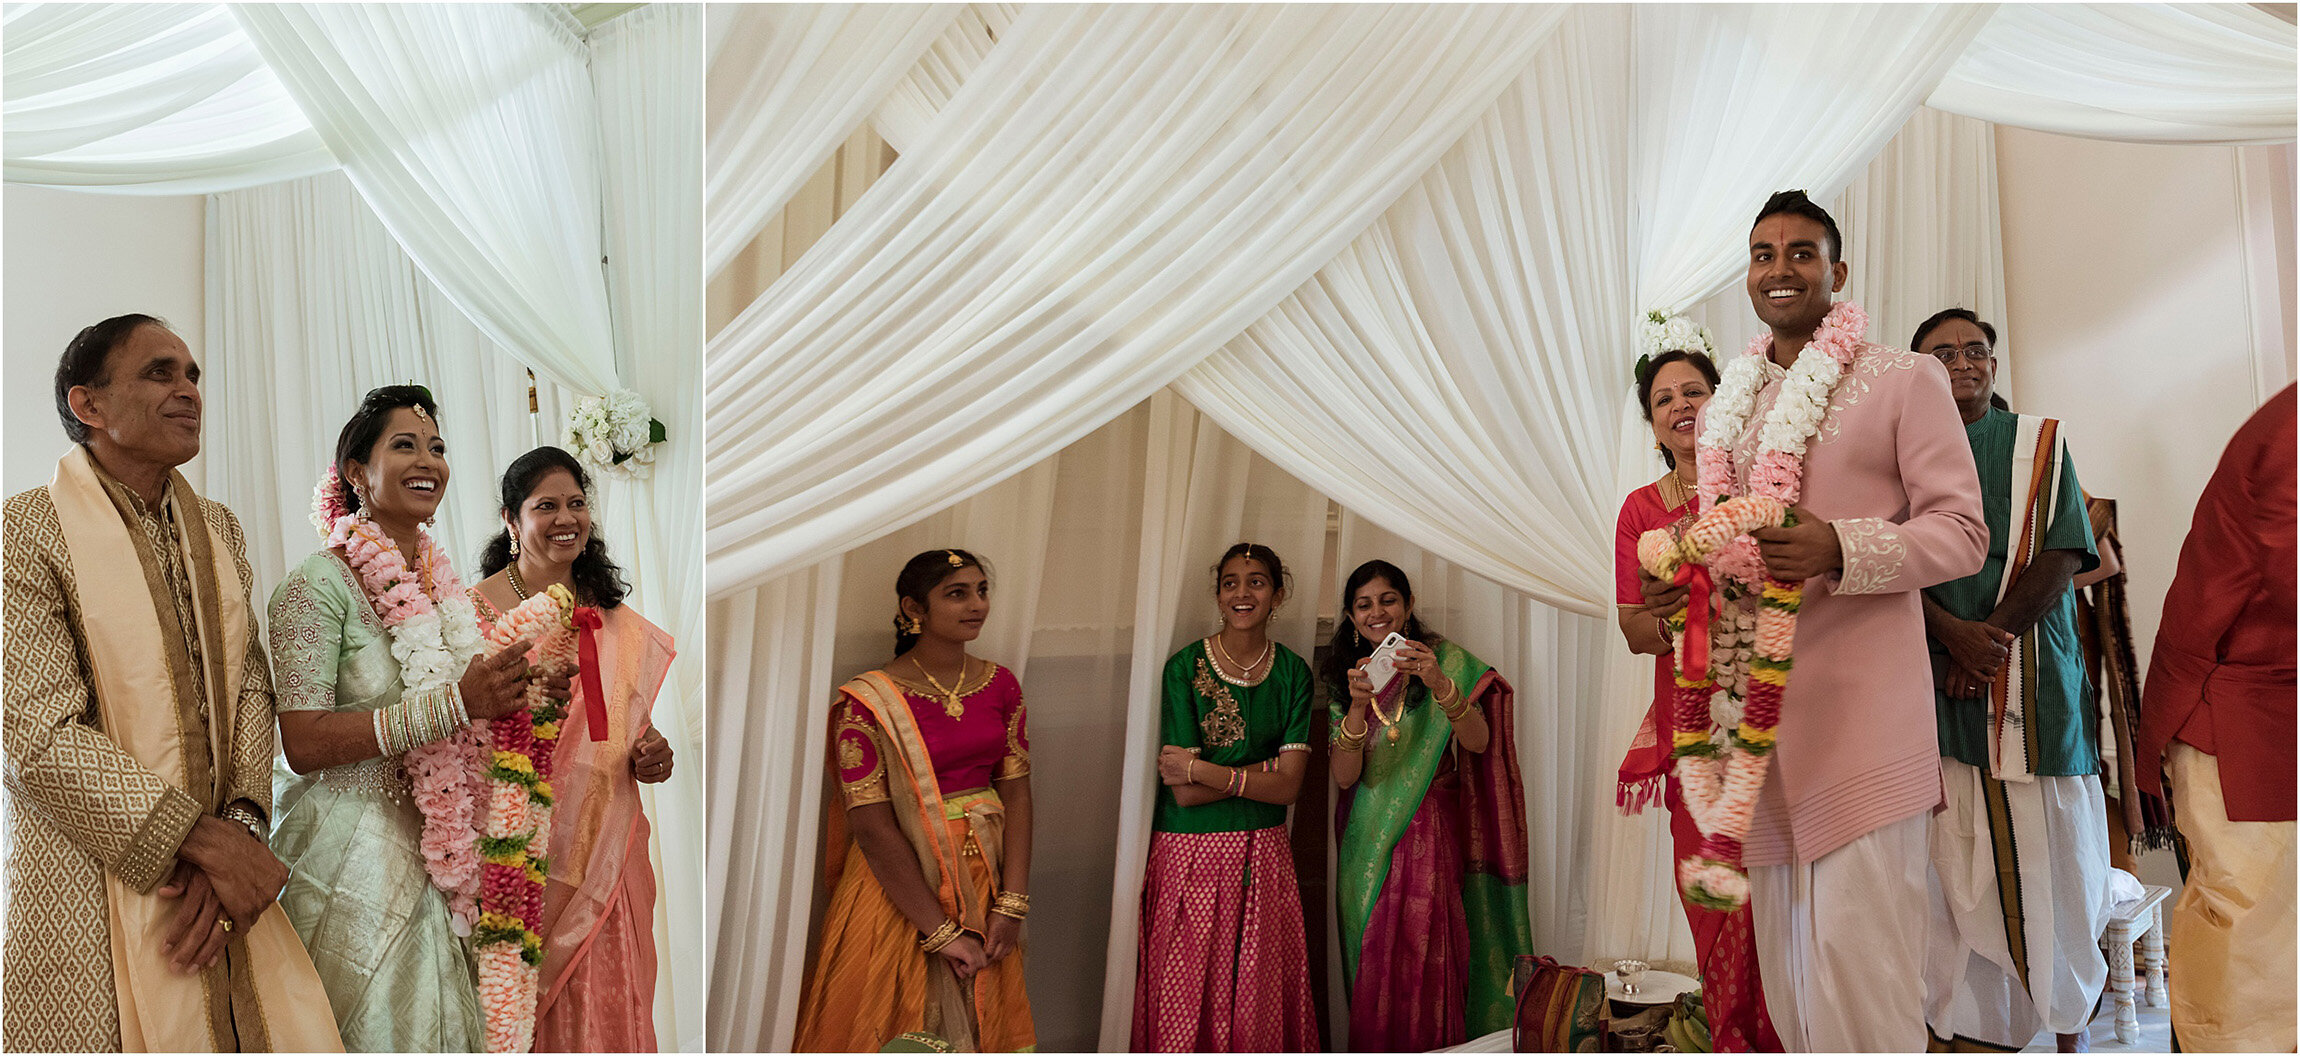 ©FianderFoto_Hindu Wedding_Bermuda_004 (1).jpg